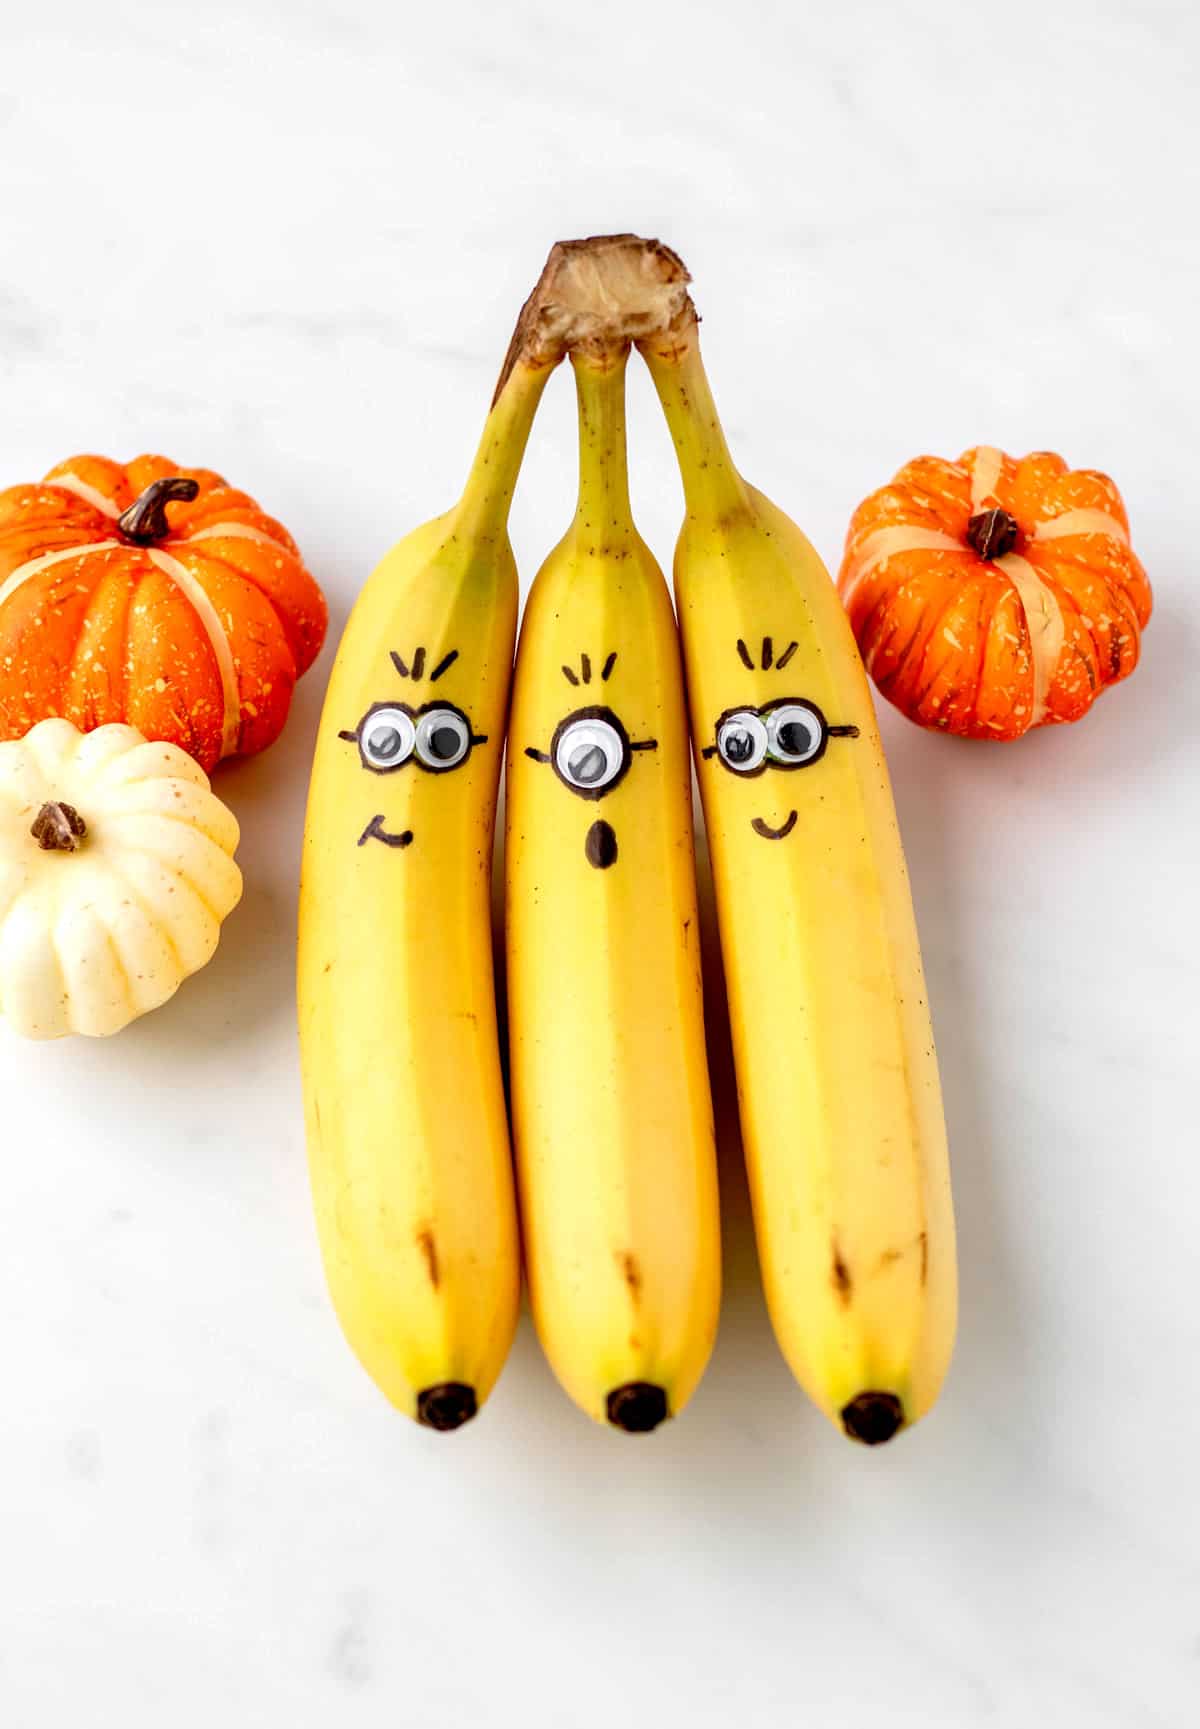 Three minion bananas next to pumpkins.